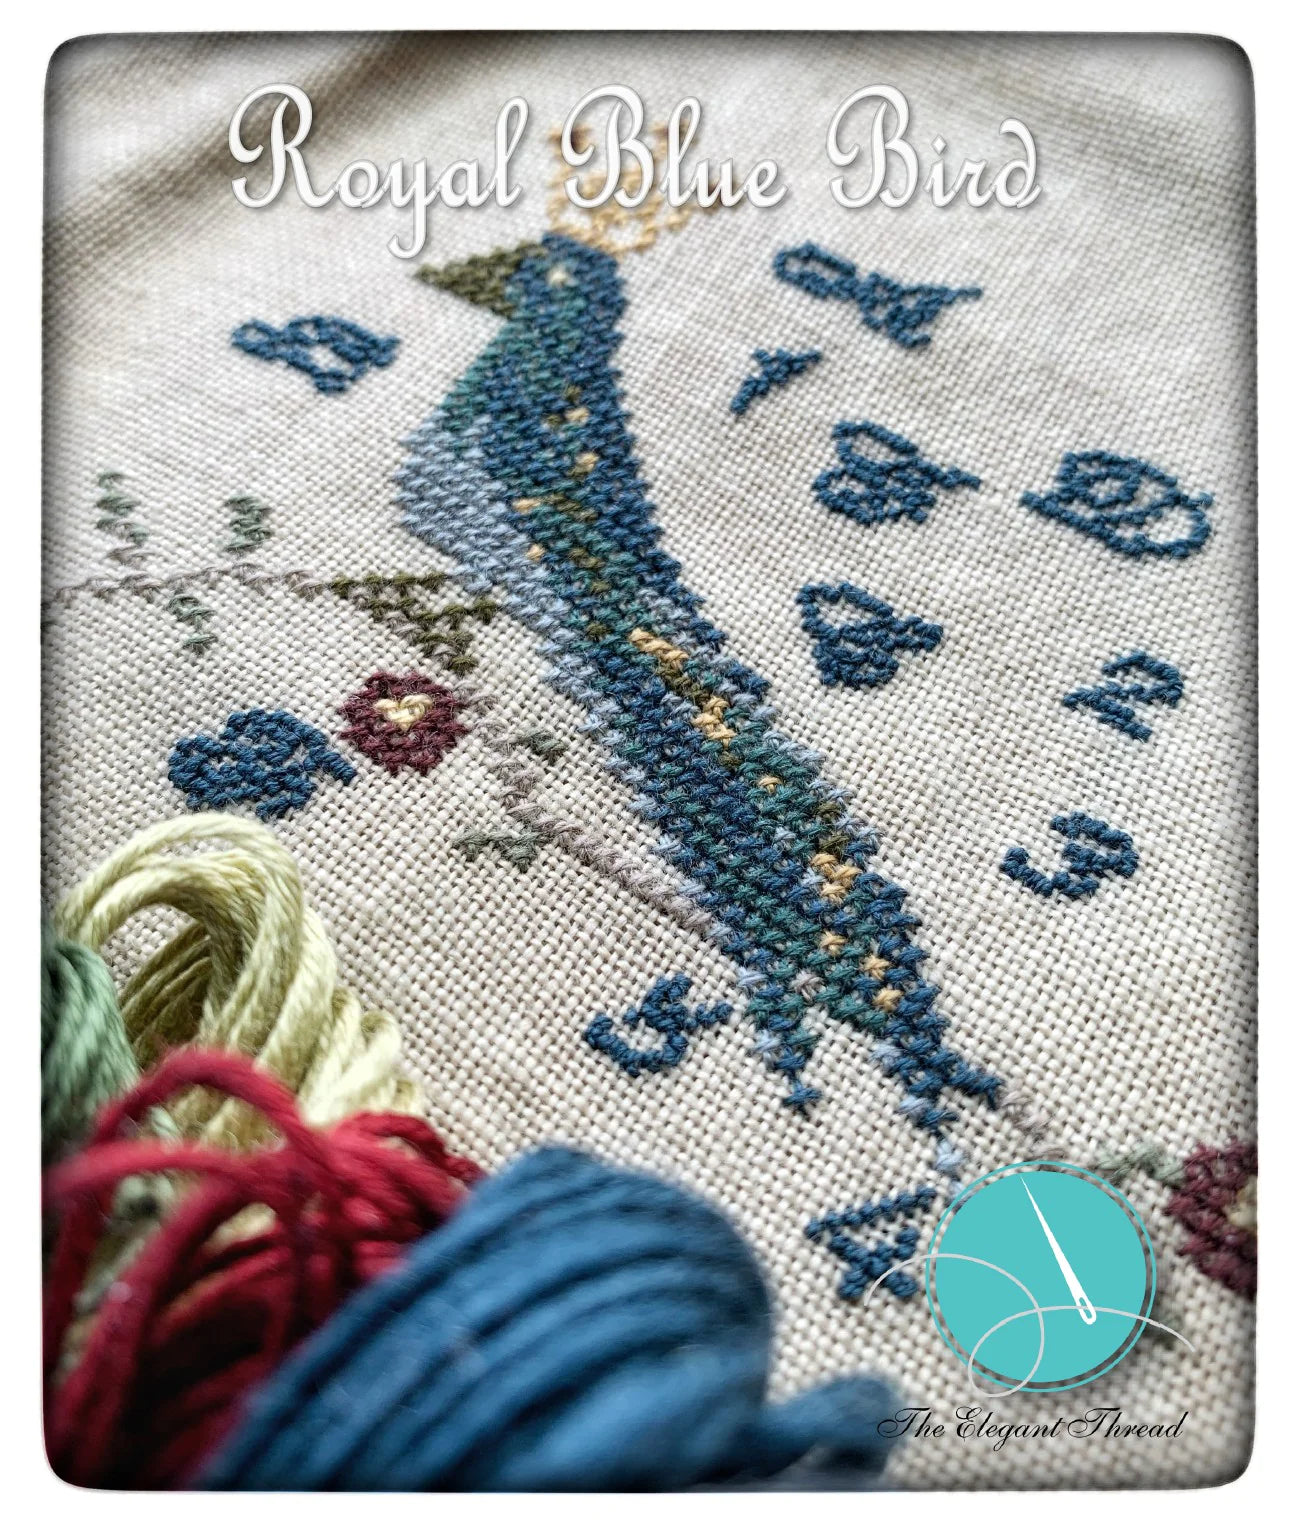 The Elegant Thread - Royal Blue Bird